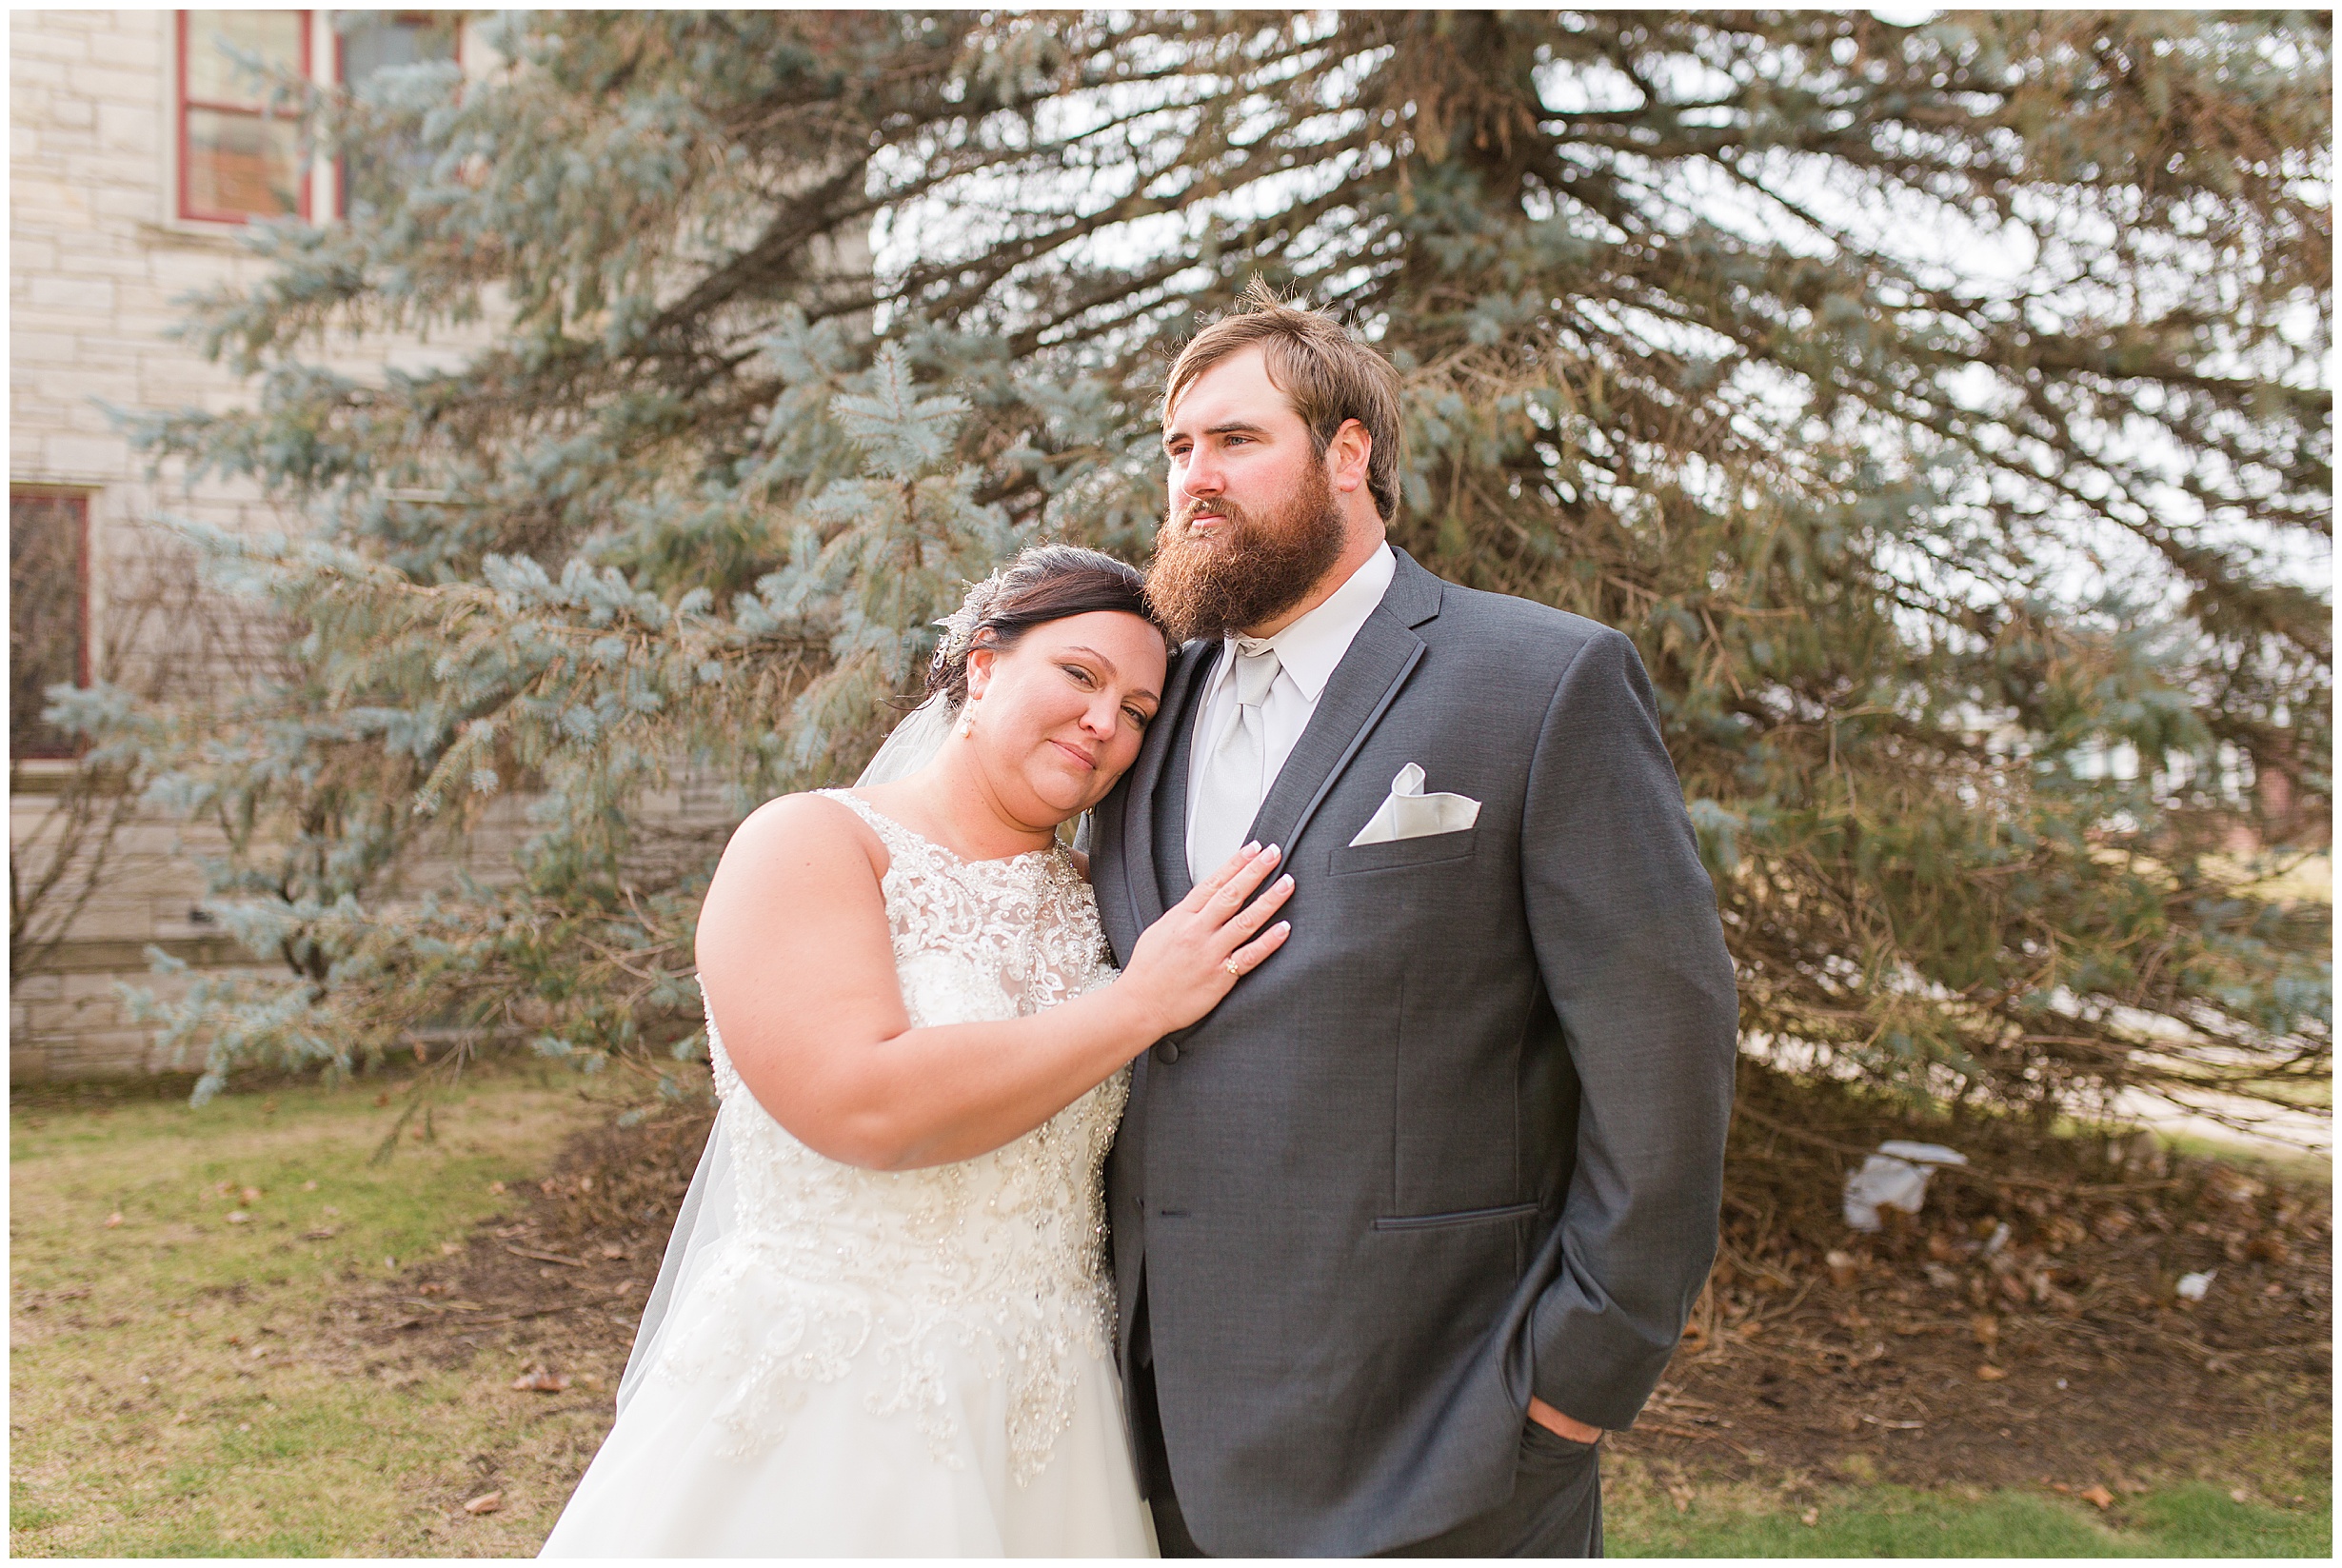 Iowa City Photographers - Decorah Wedding -Megan Snitker Photography_0130.jpg